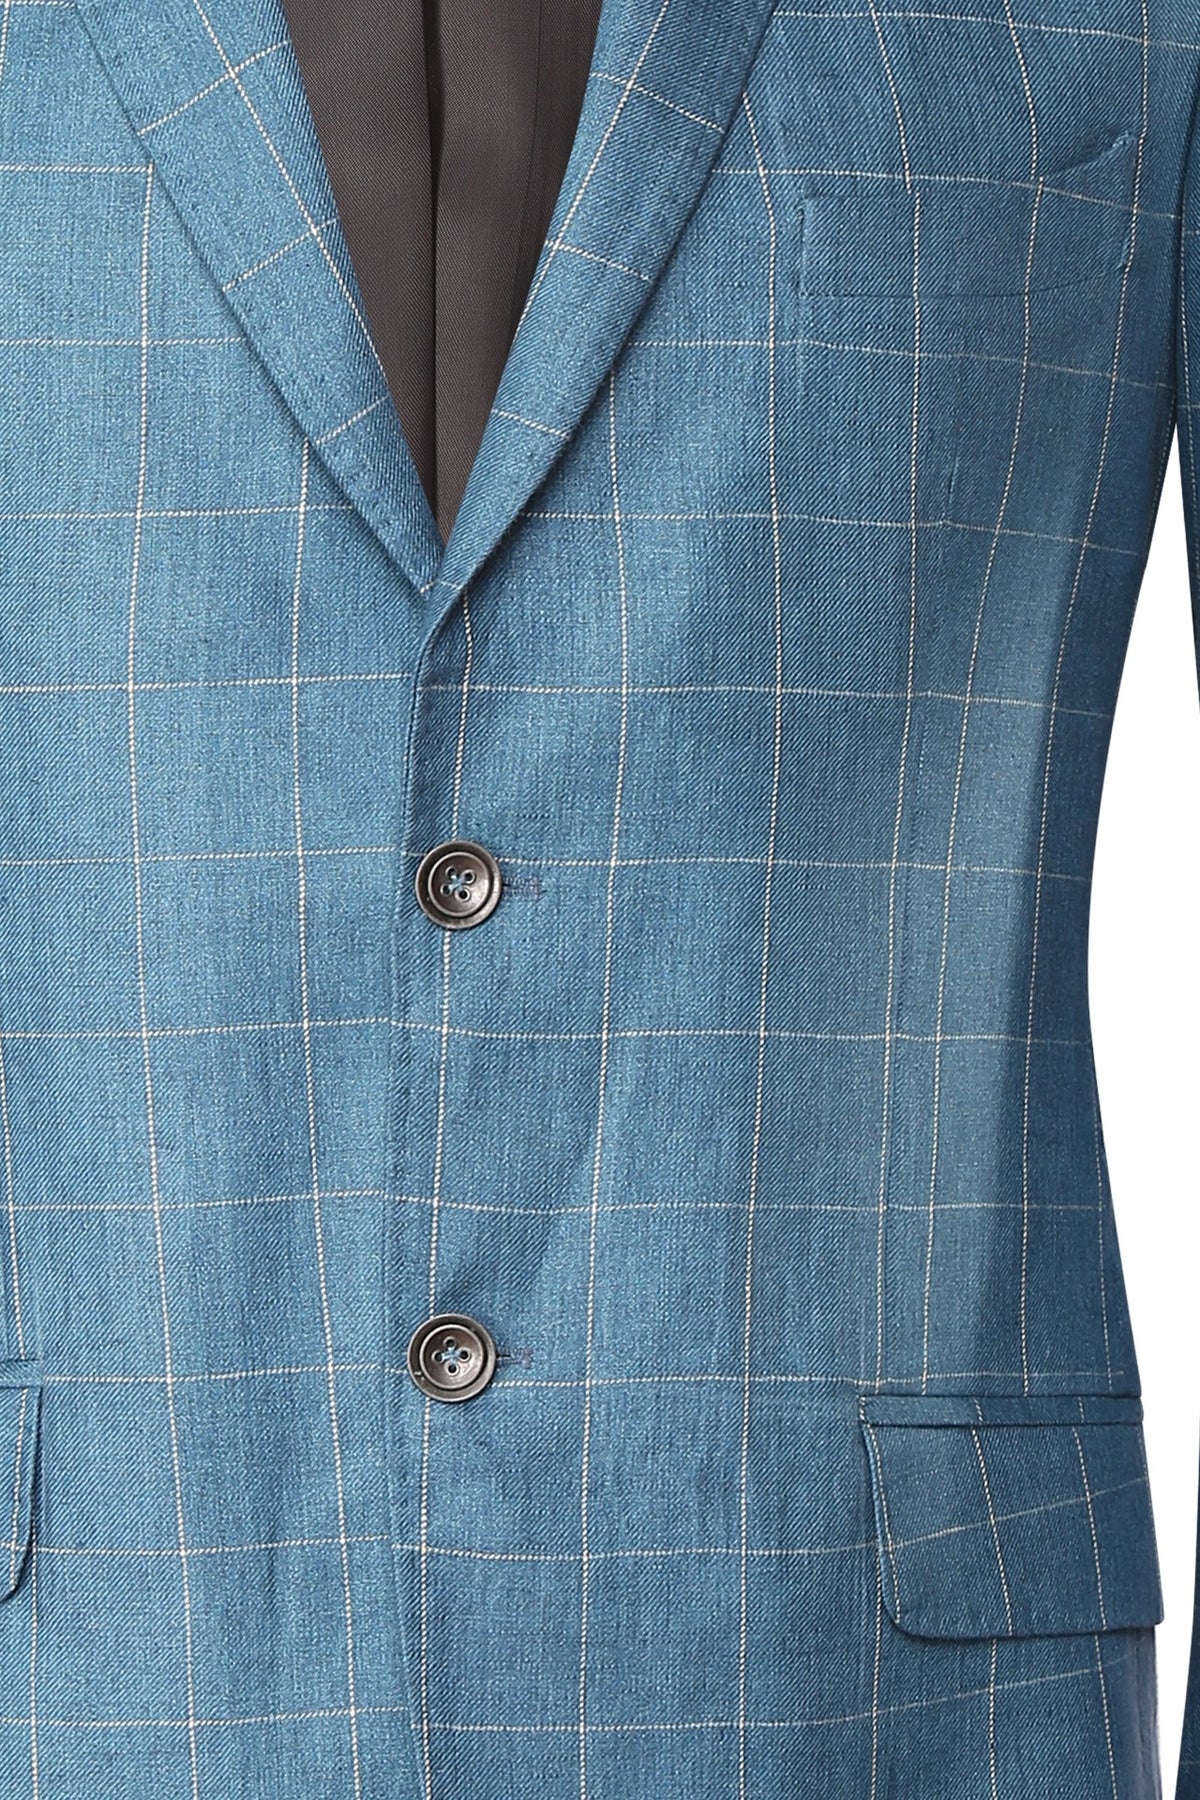 Tranquil blue checkered linen jacket